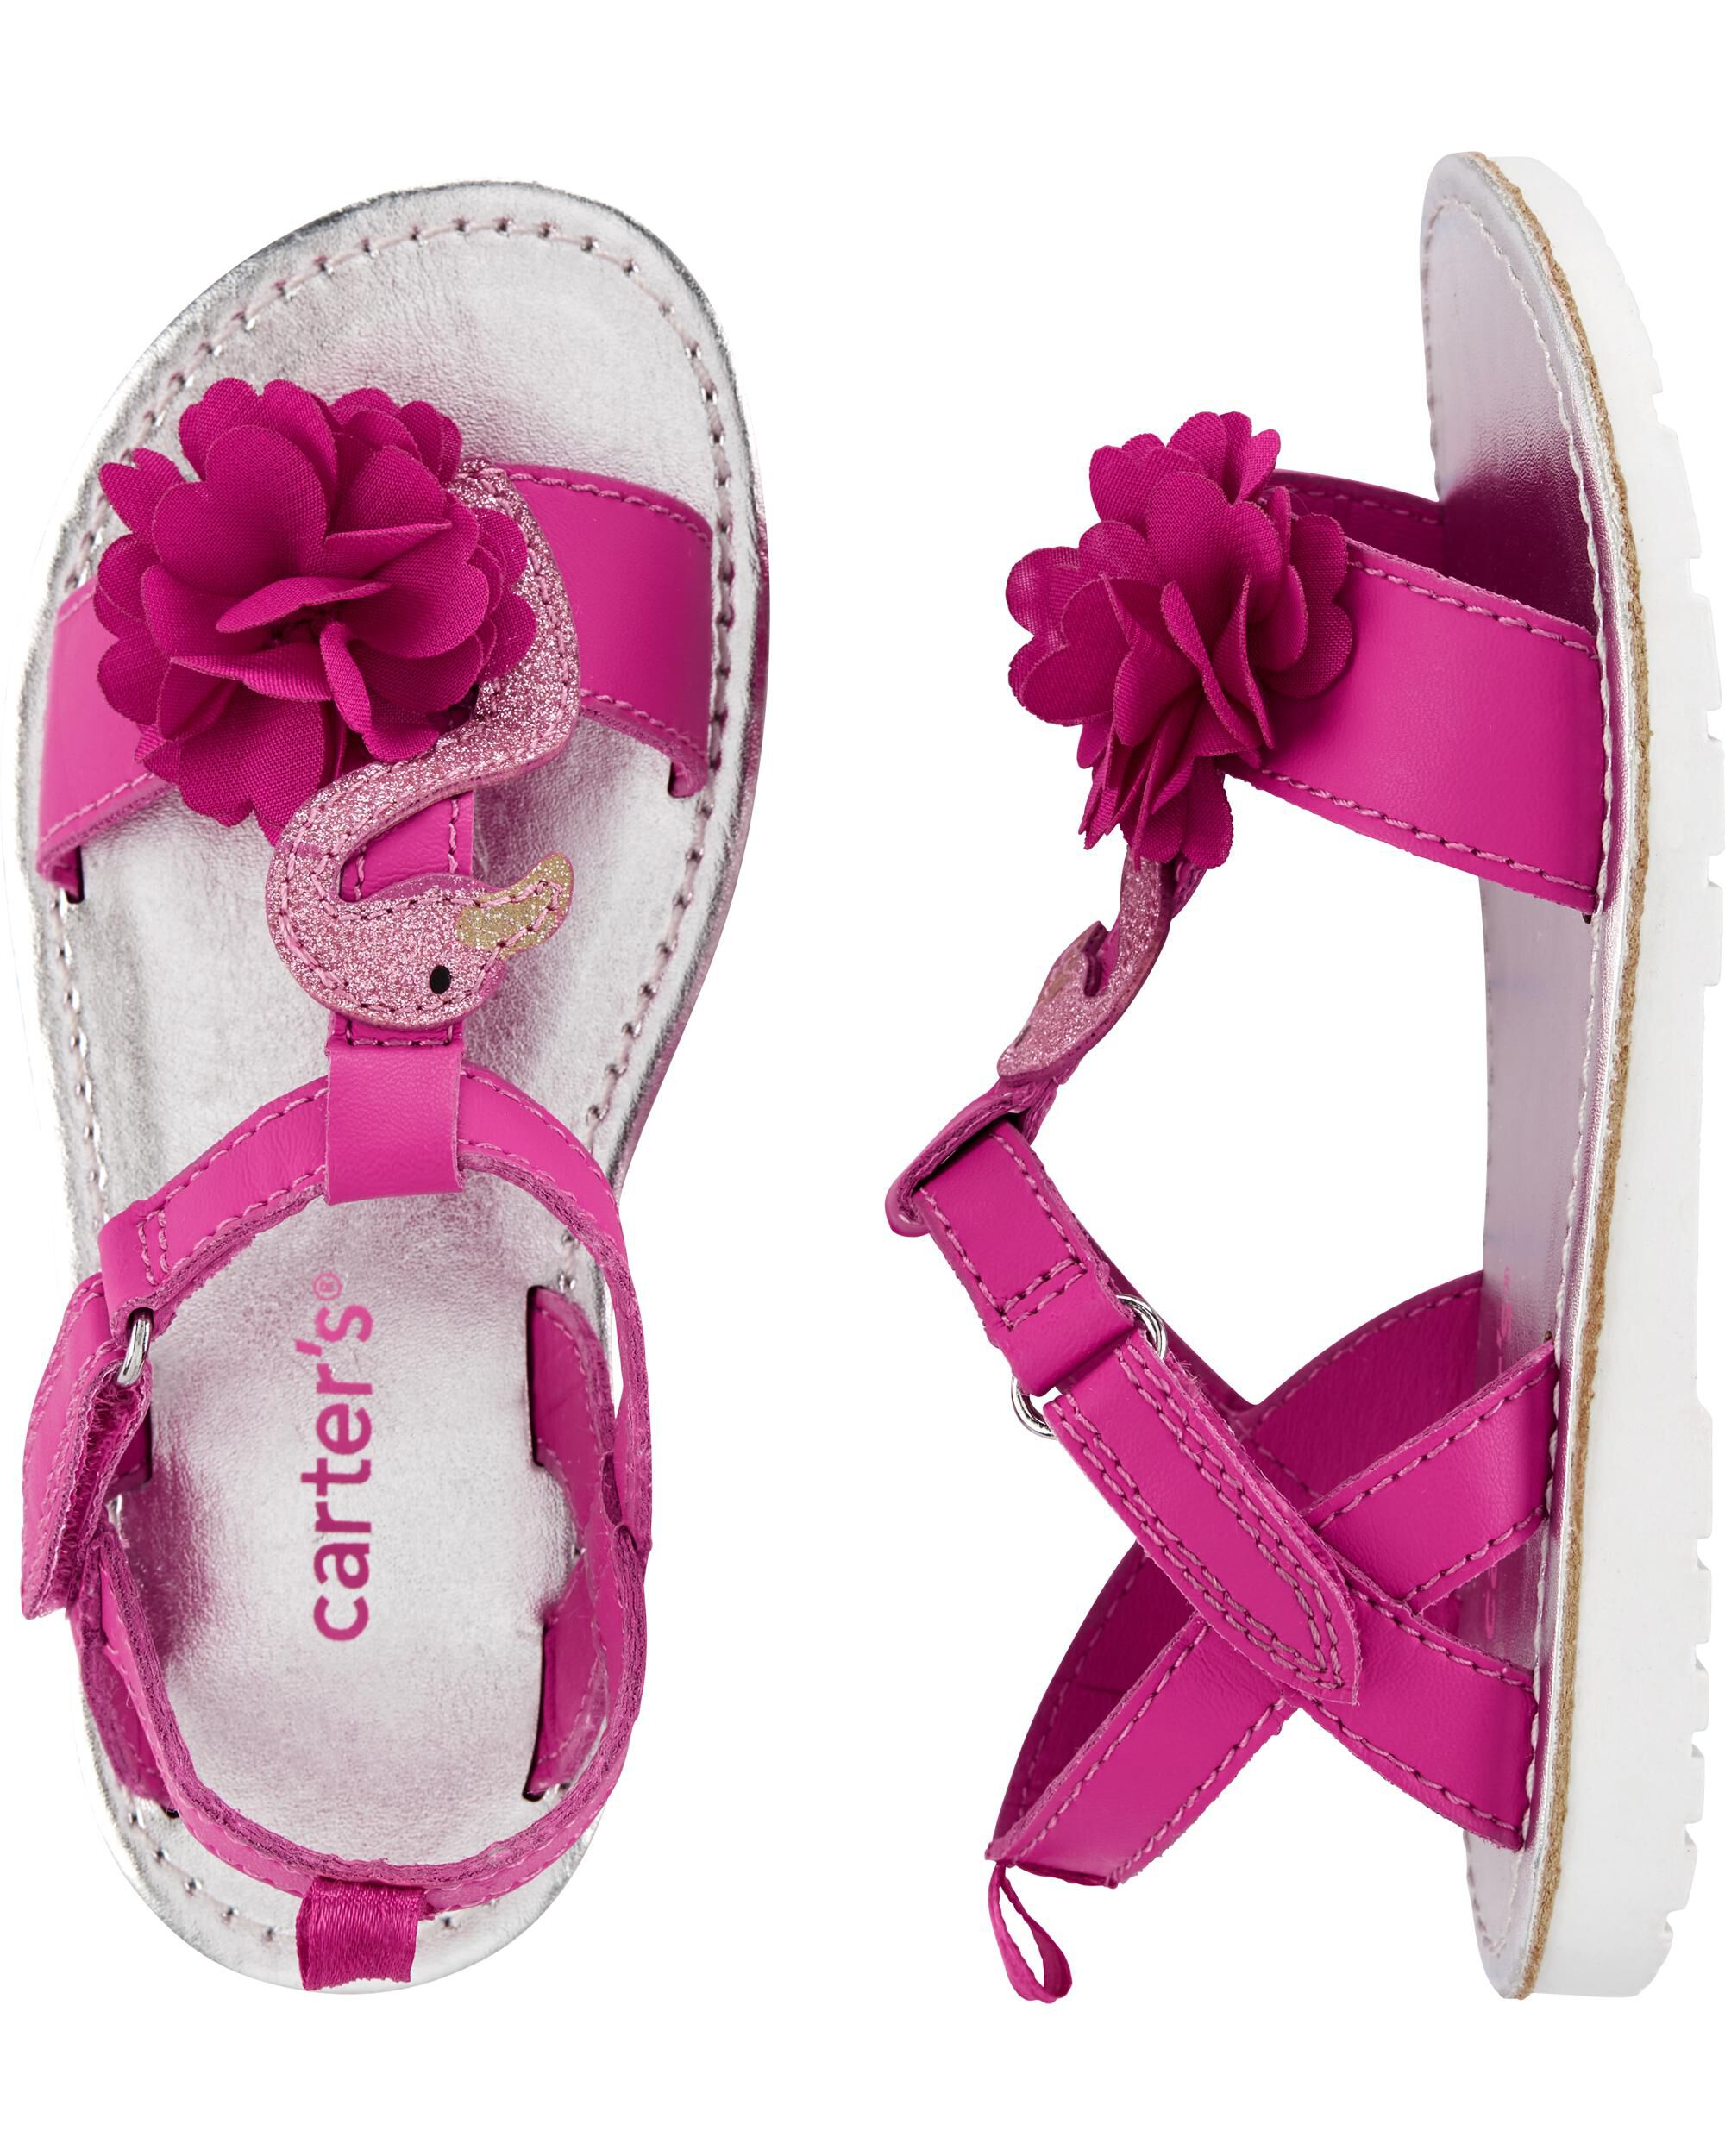 Carter's Infant Girls sandals pink glitter NWT 6-9m